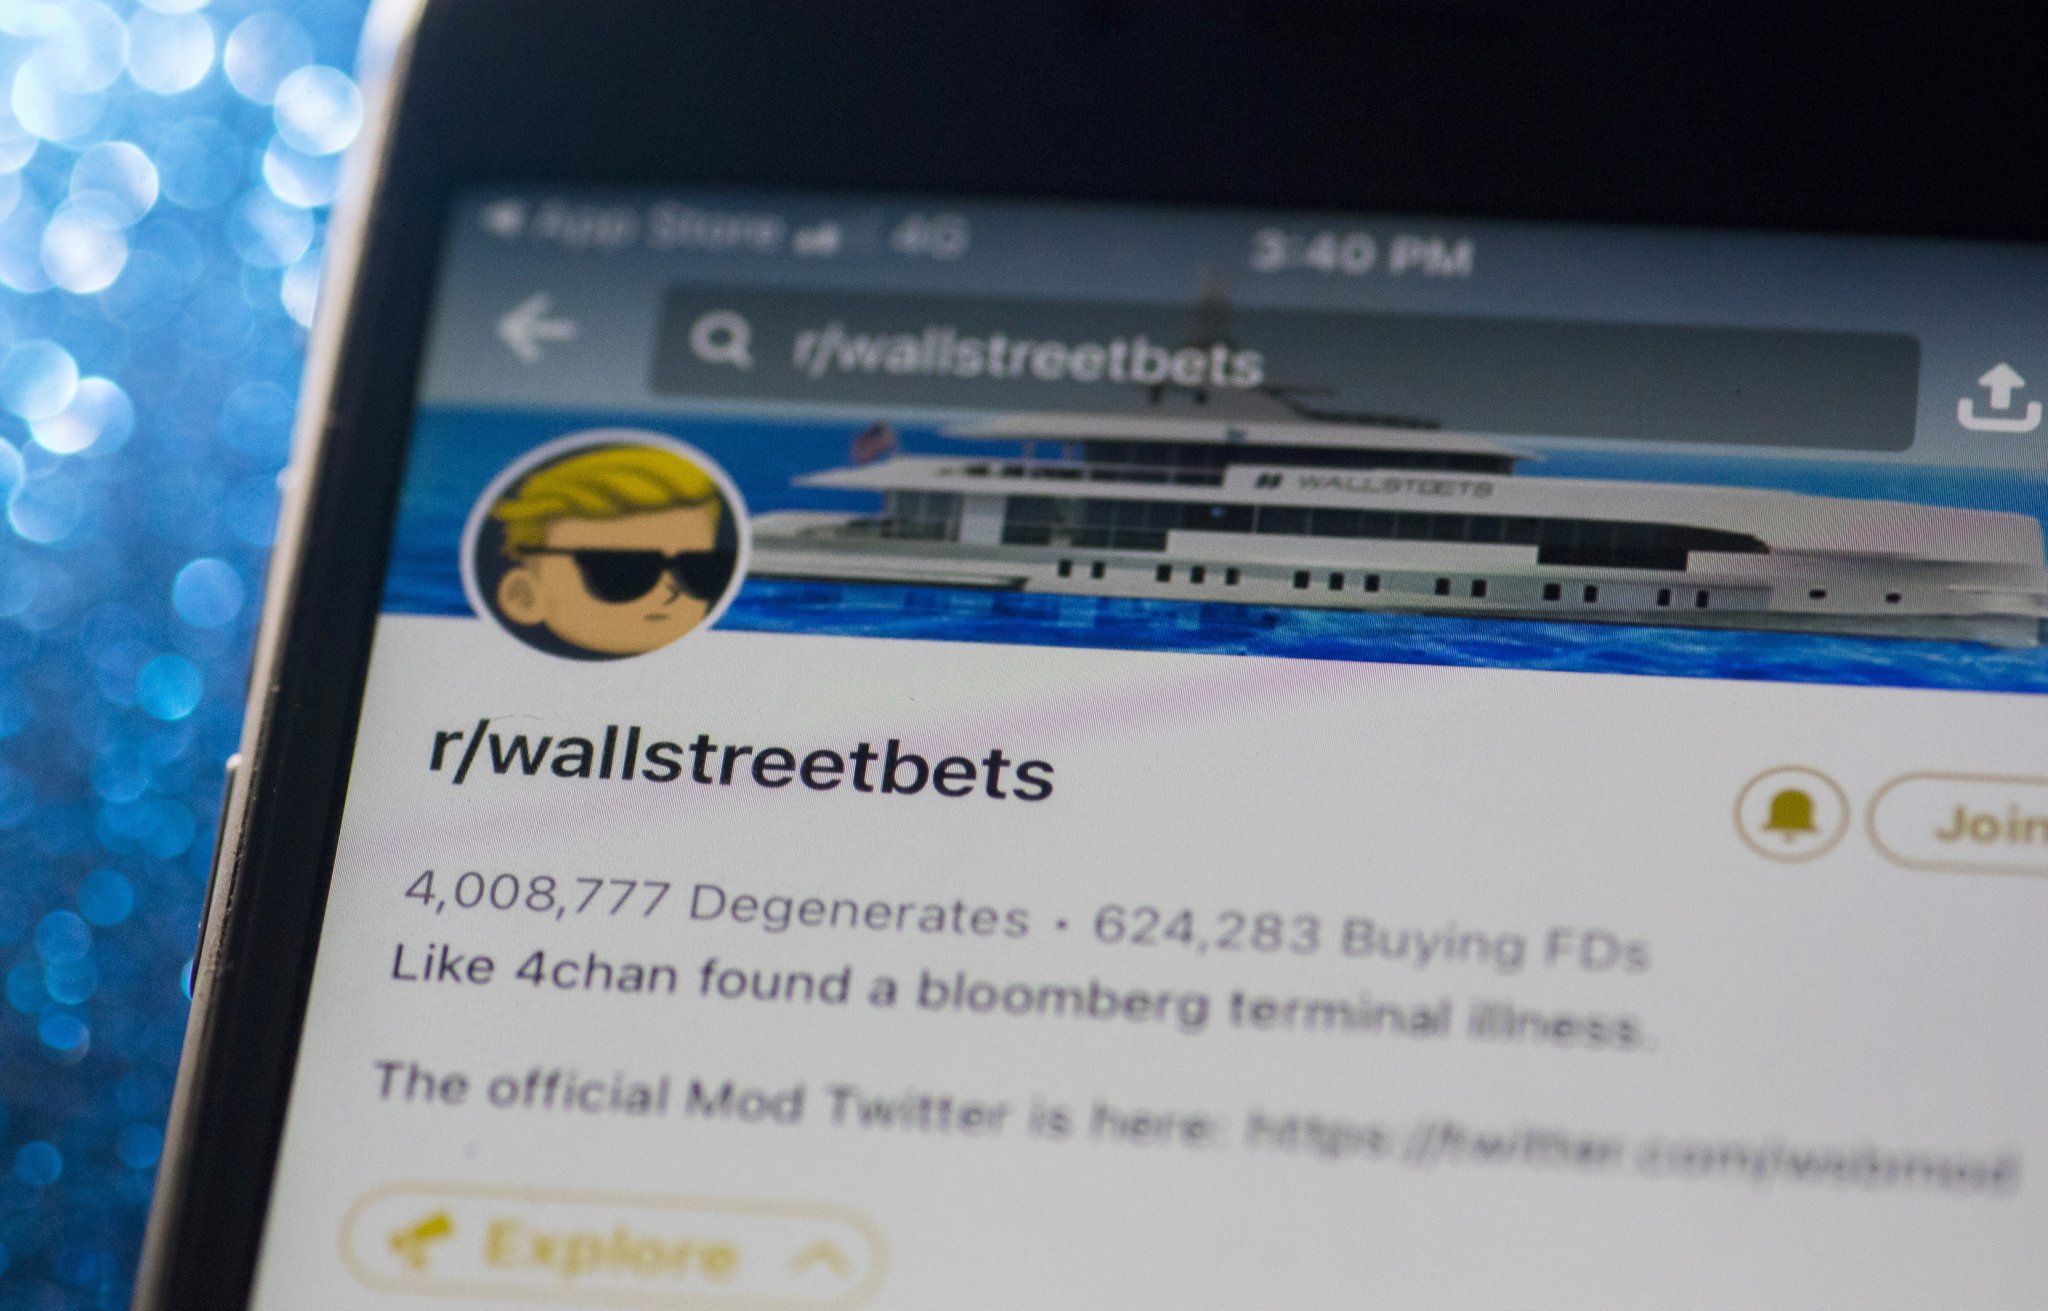 Reddit WallStreetBets Founder Calls GameStop Stock Frenzy A 'Symbolic Movement'